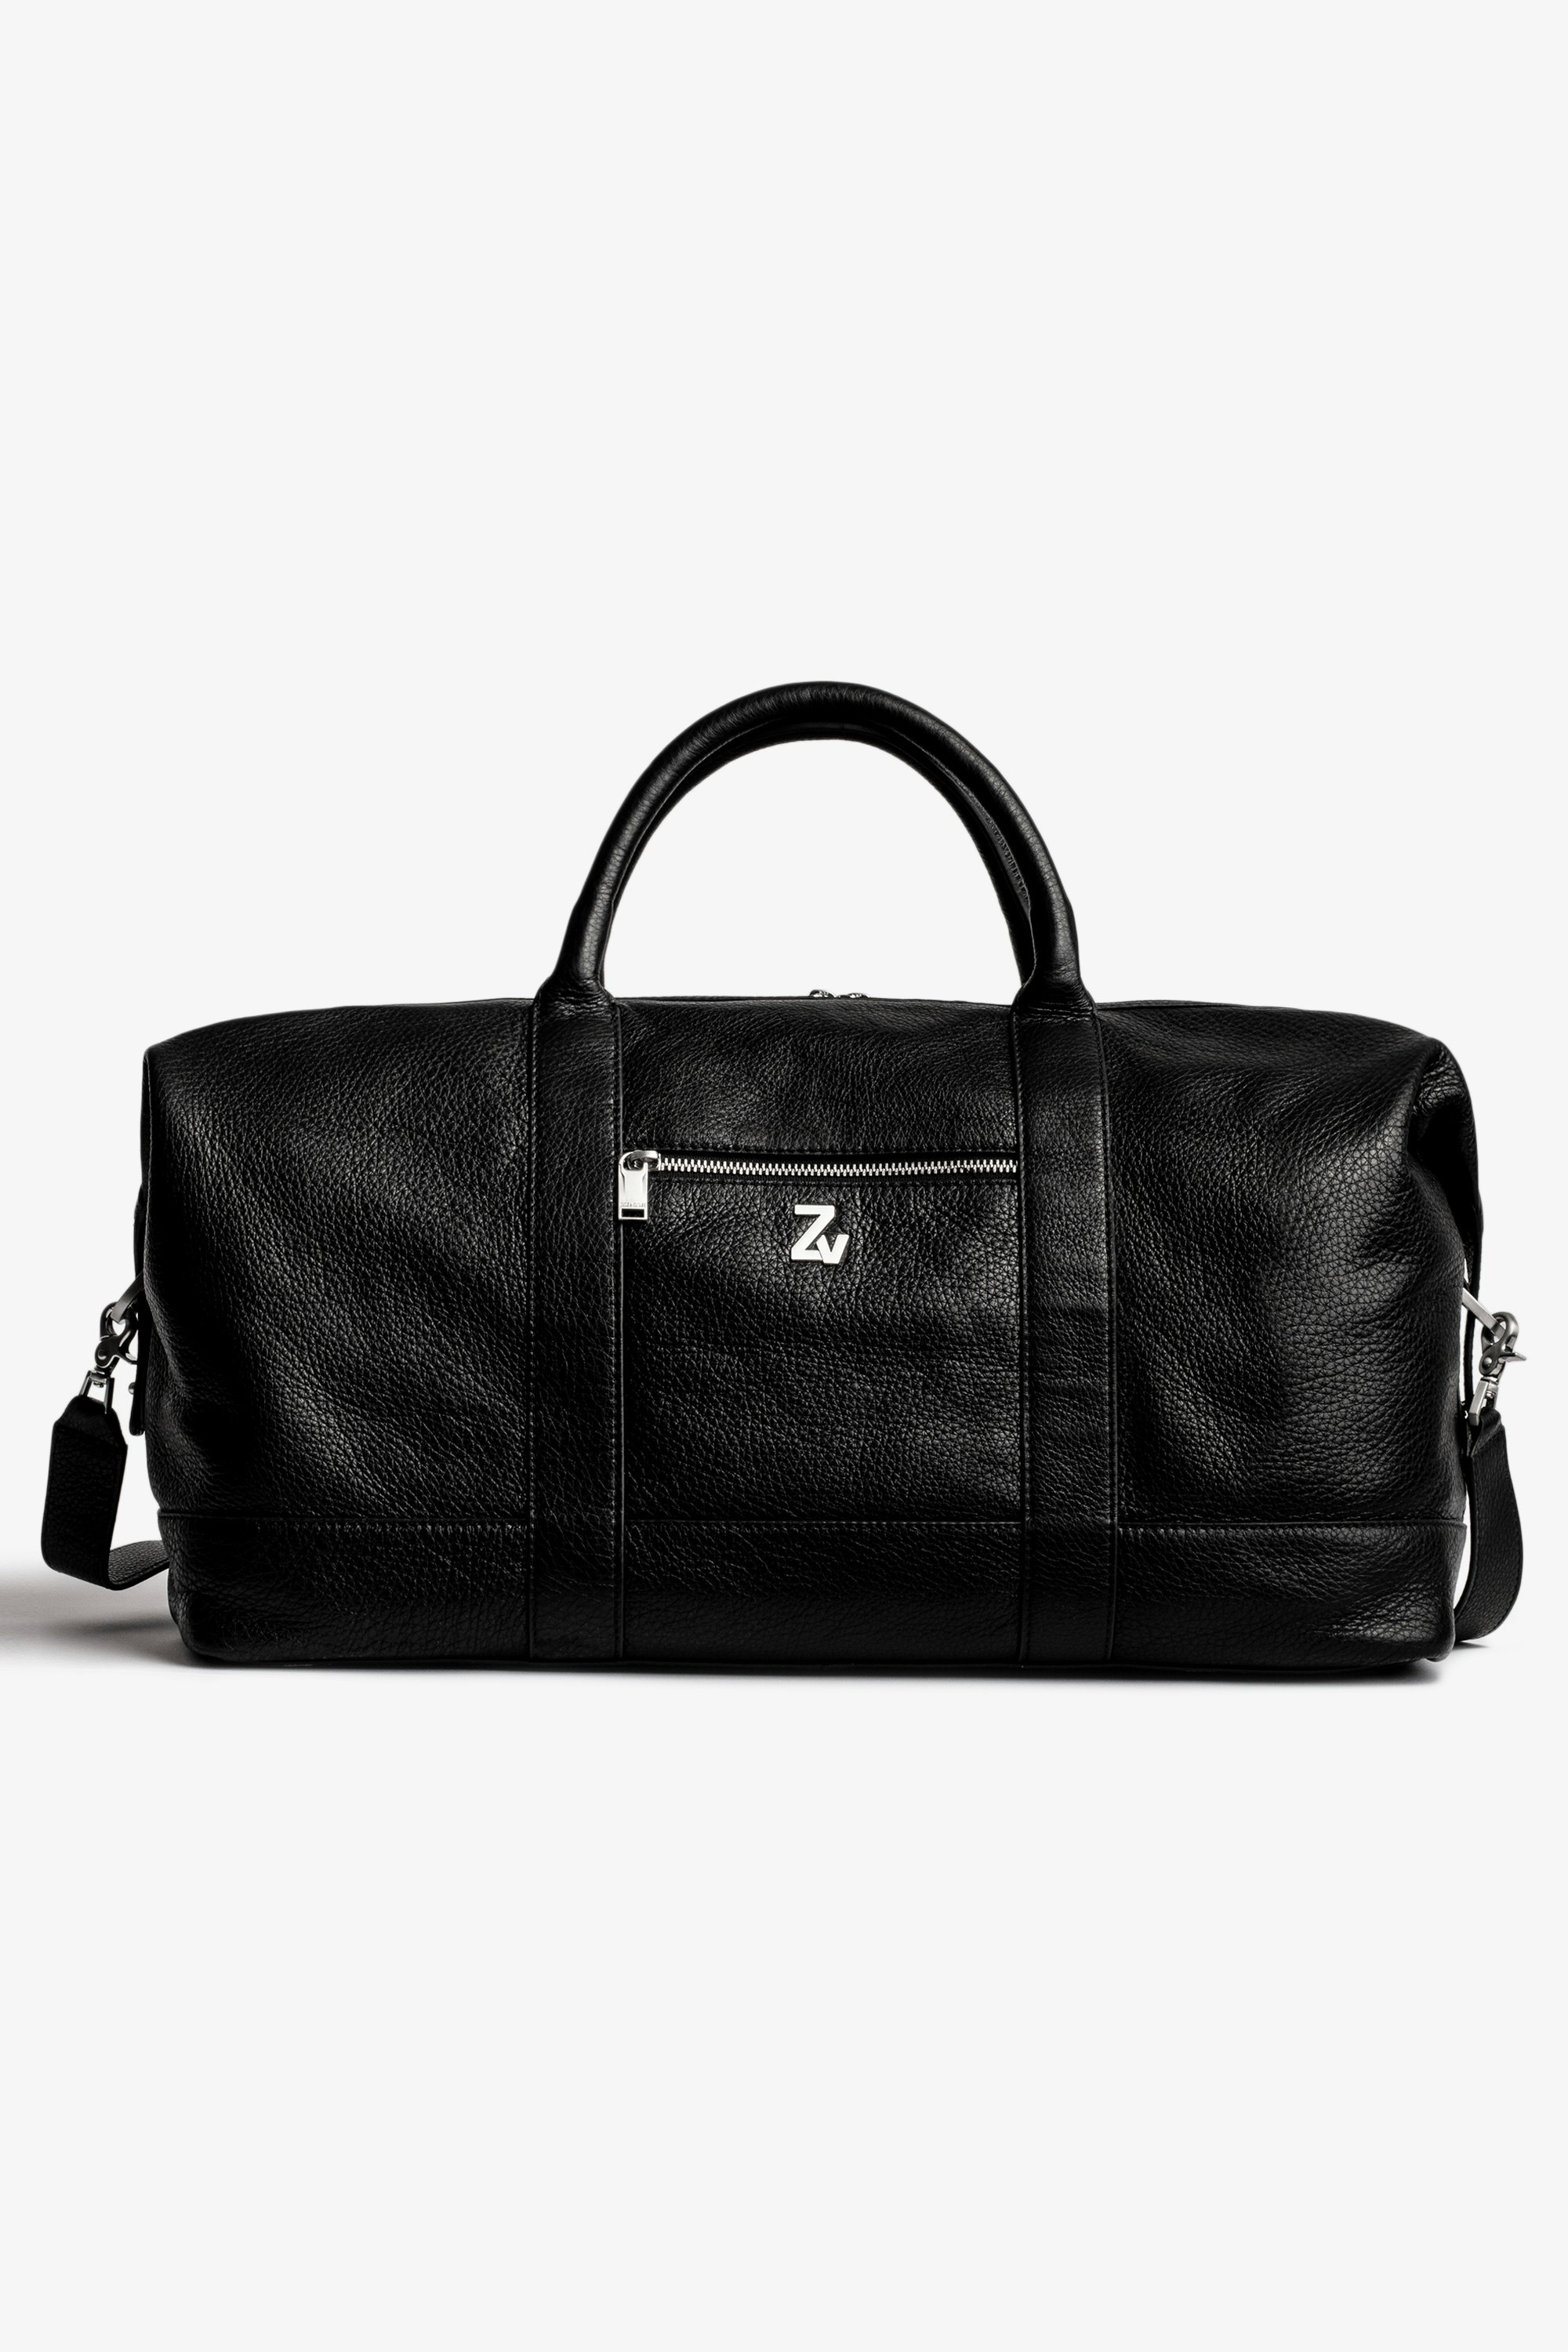 ZV Initiale Jamie バッグ Men's black grained leather bag